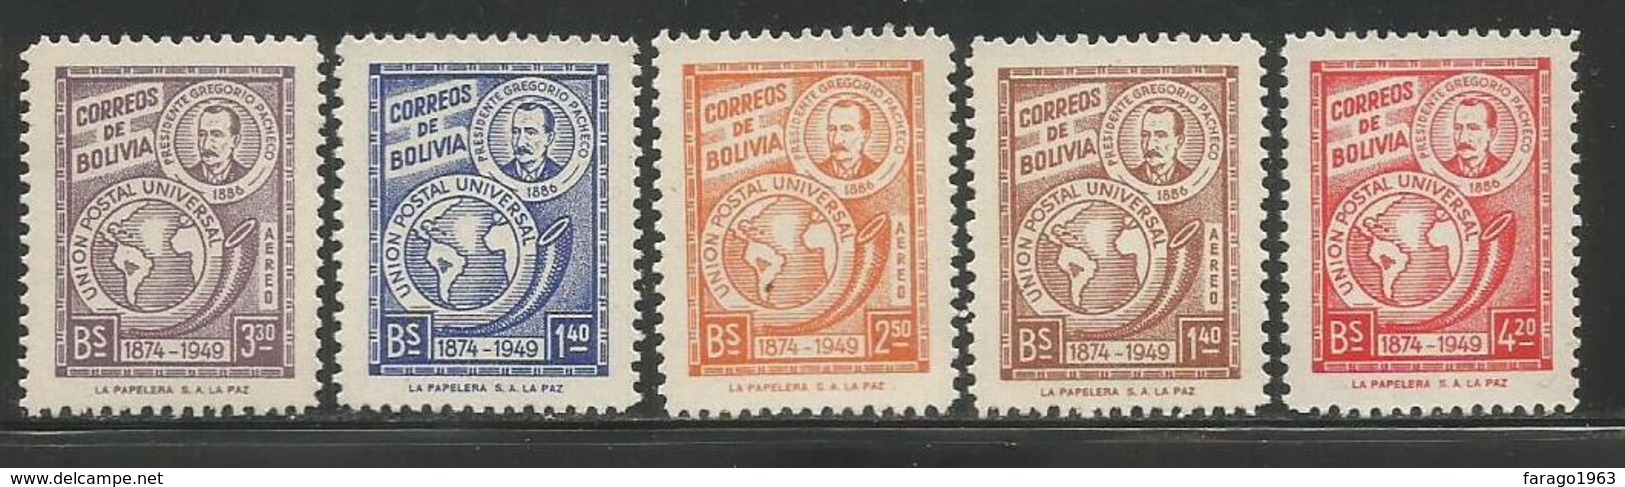 1950 Bolivia UPU   Complete Set Of 5  MNH - Bolivia